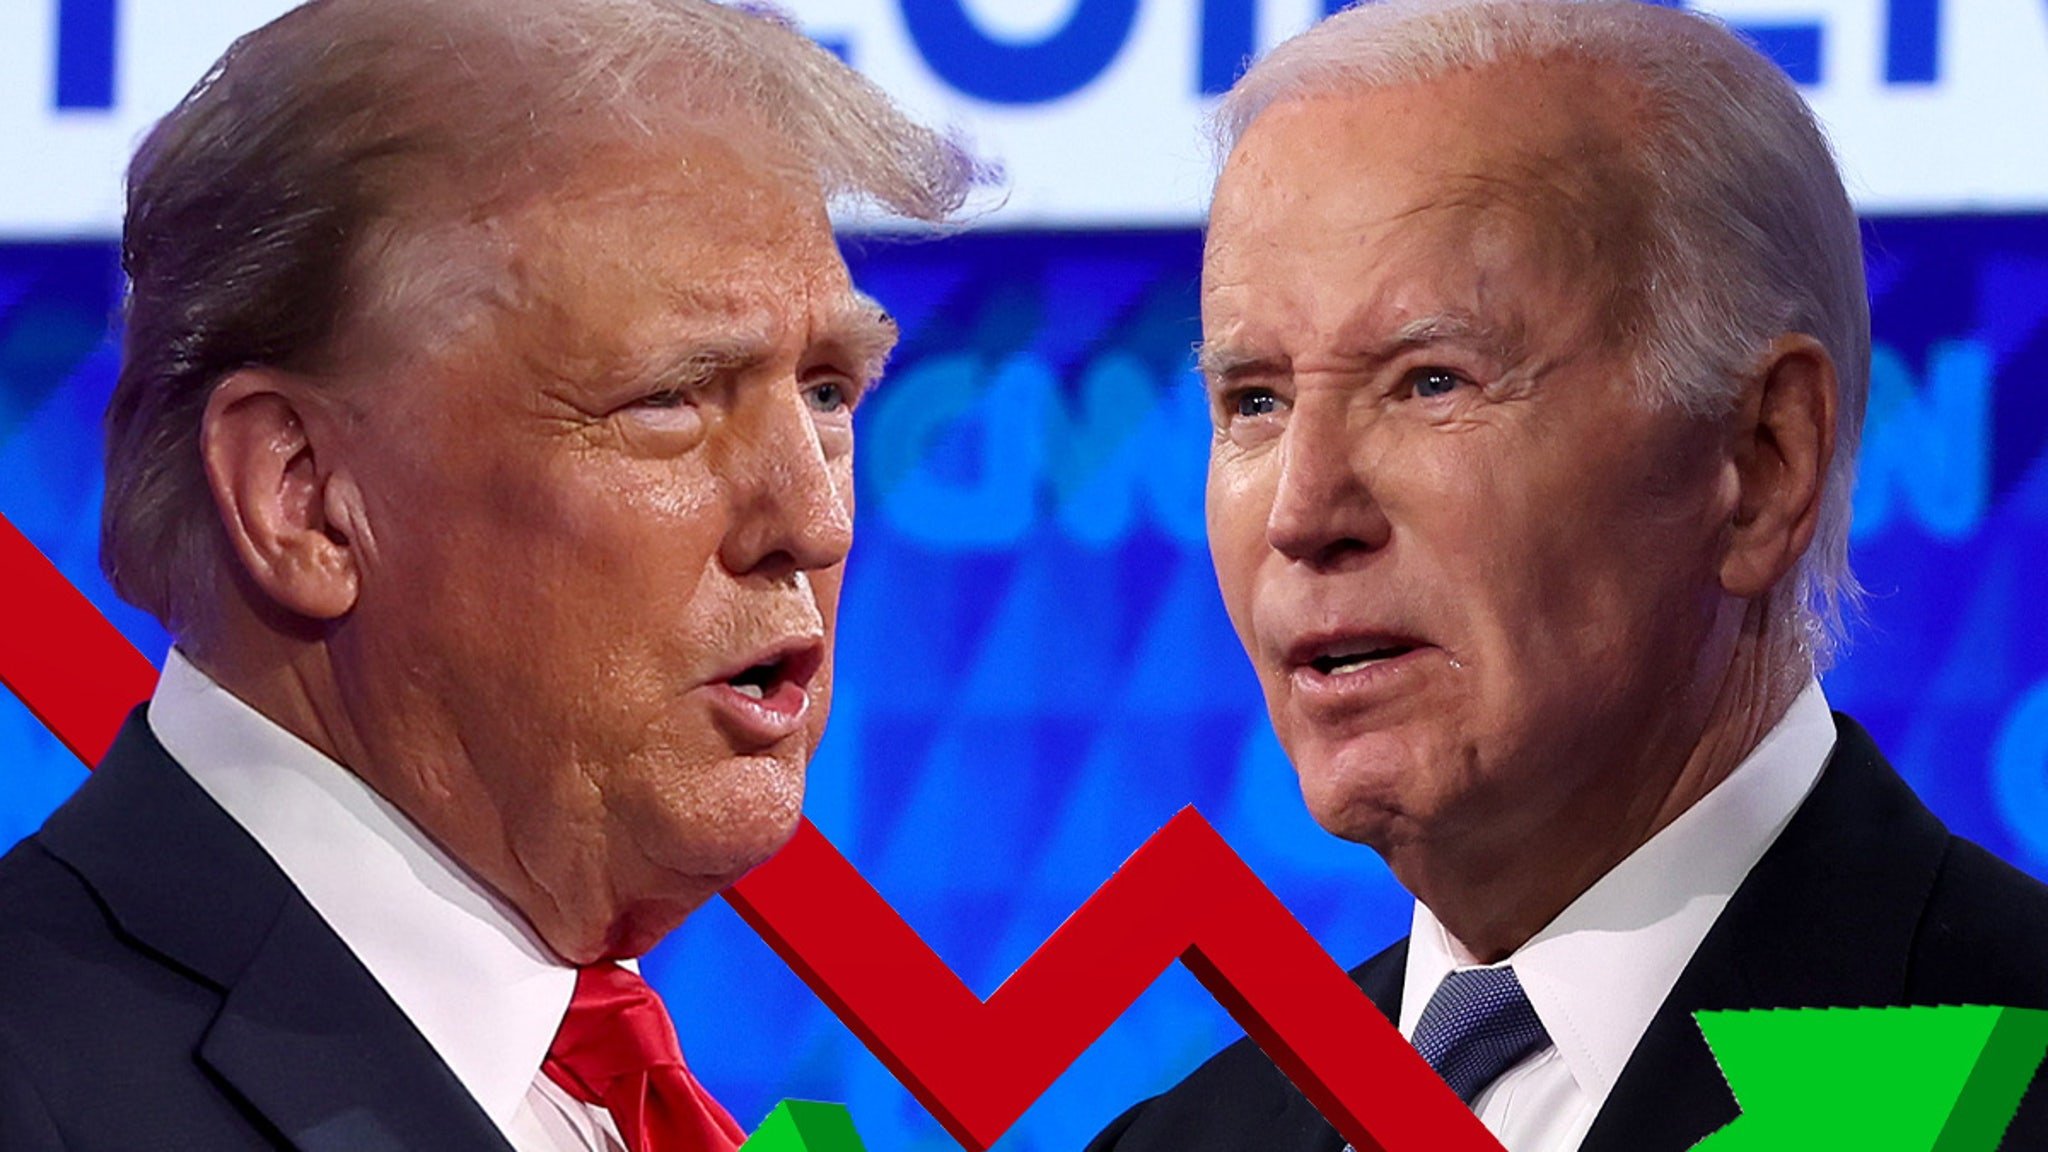 Trump Resoundingly Beat Biden in Debate According to Flash Polling